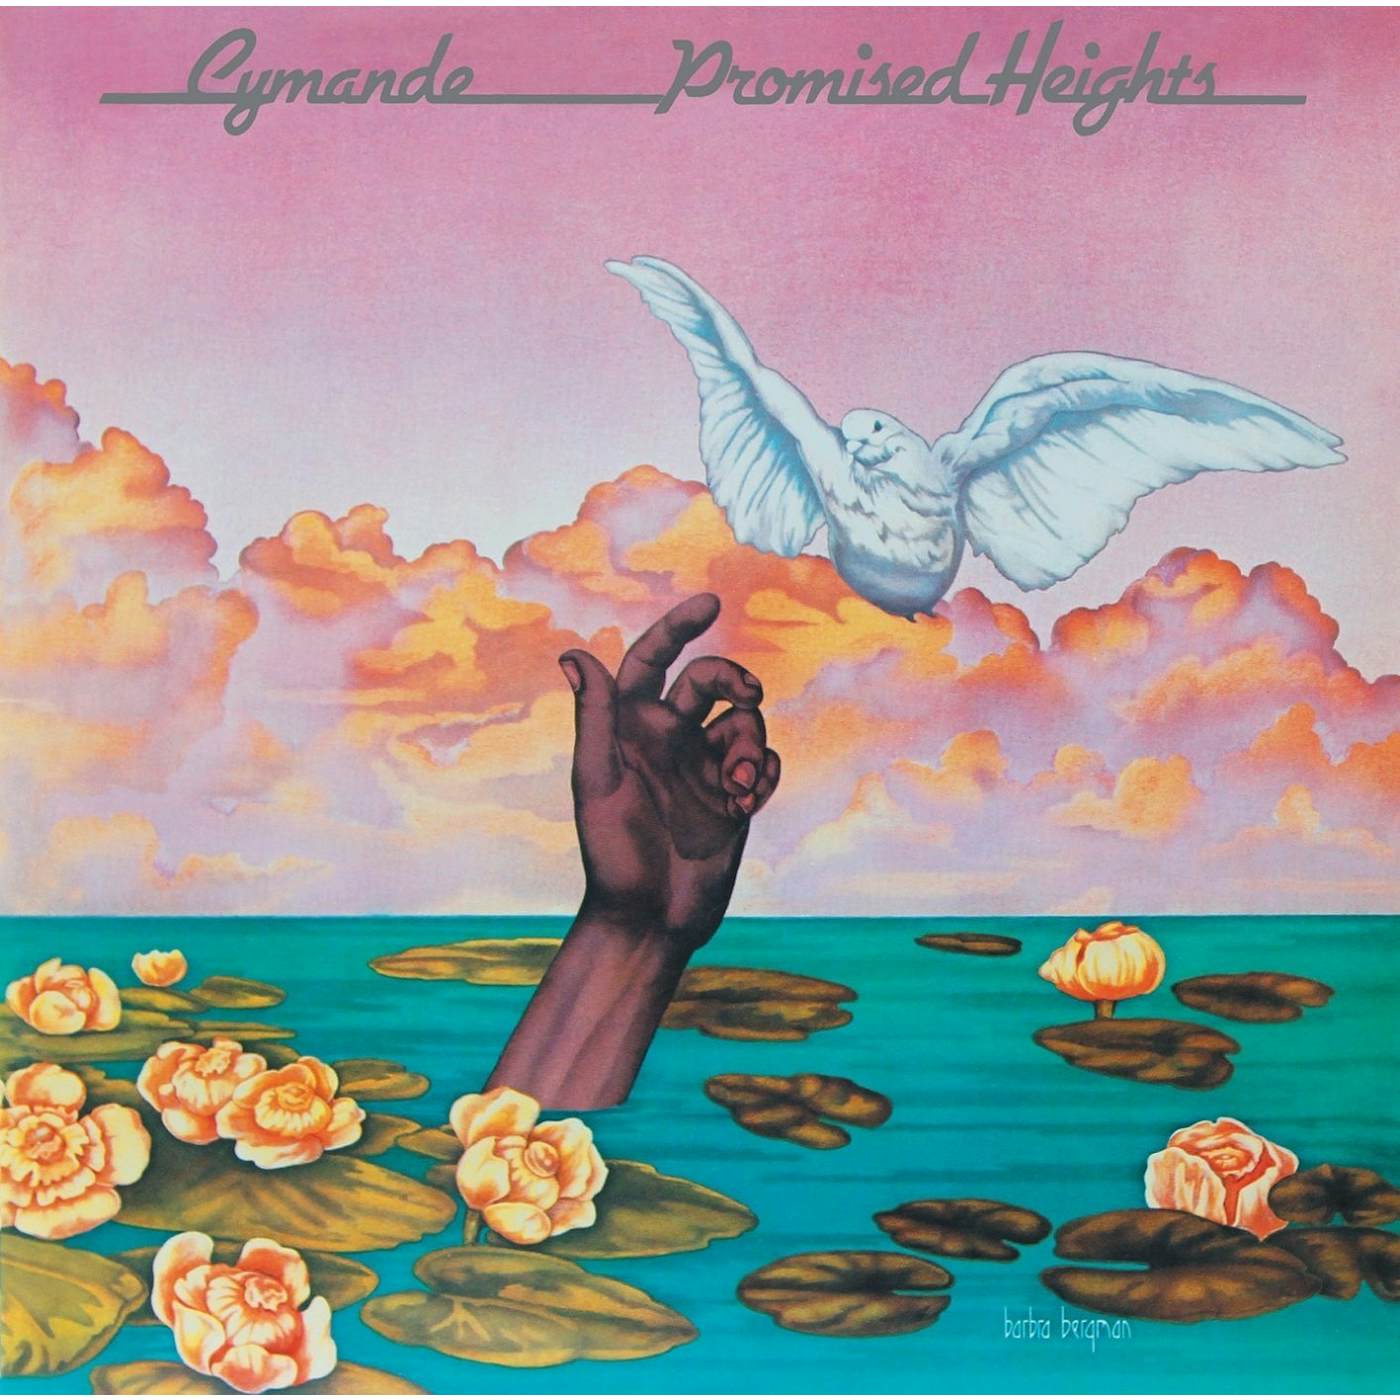 Cymande PROMISED HEIGHTS CD